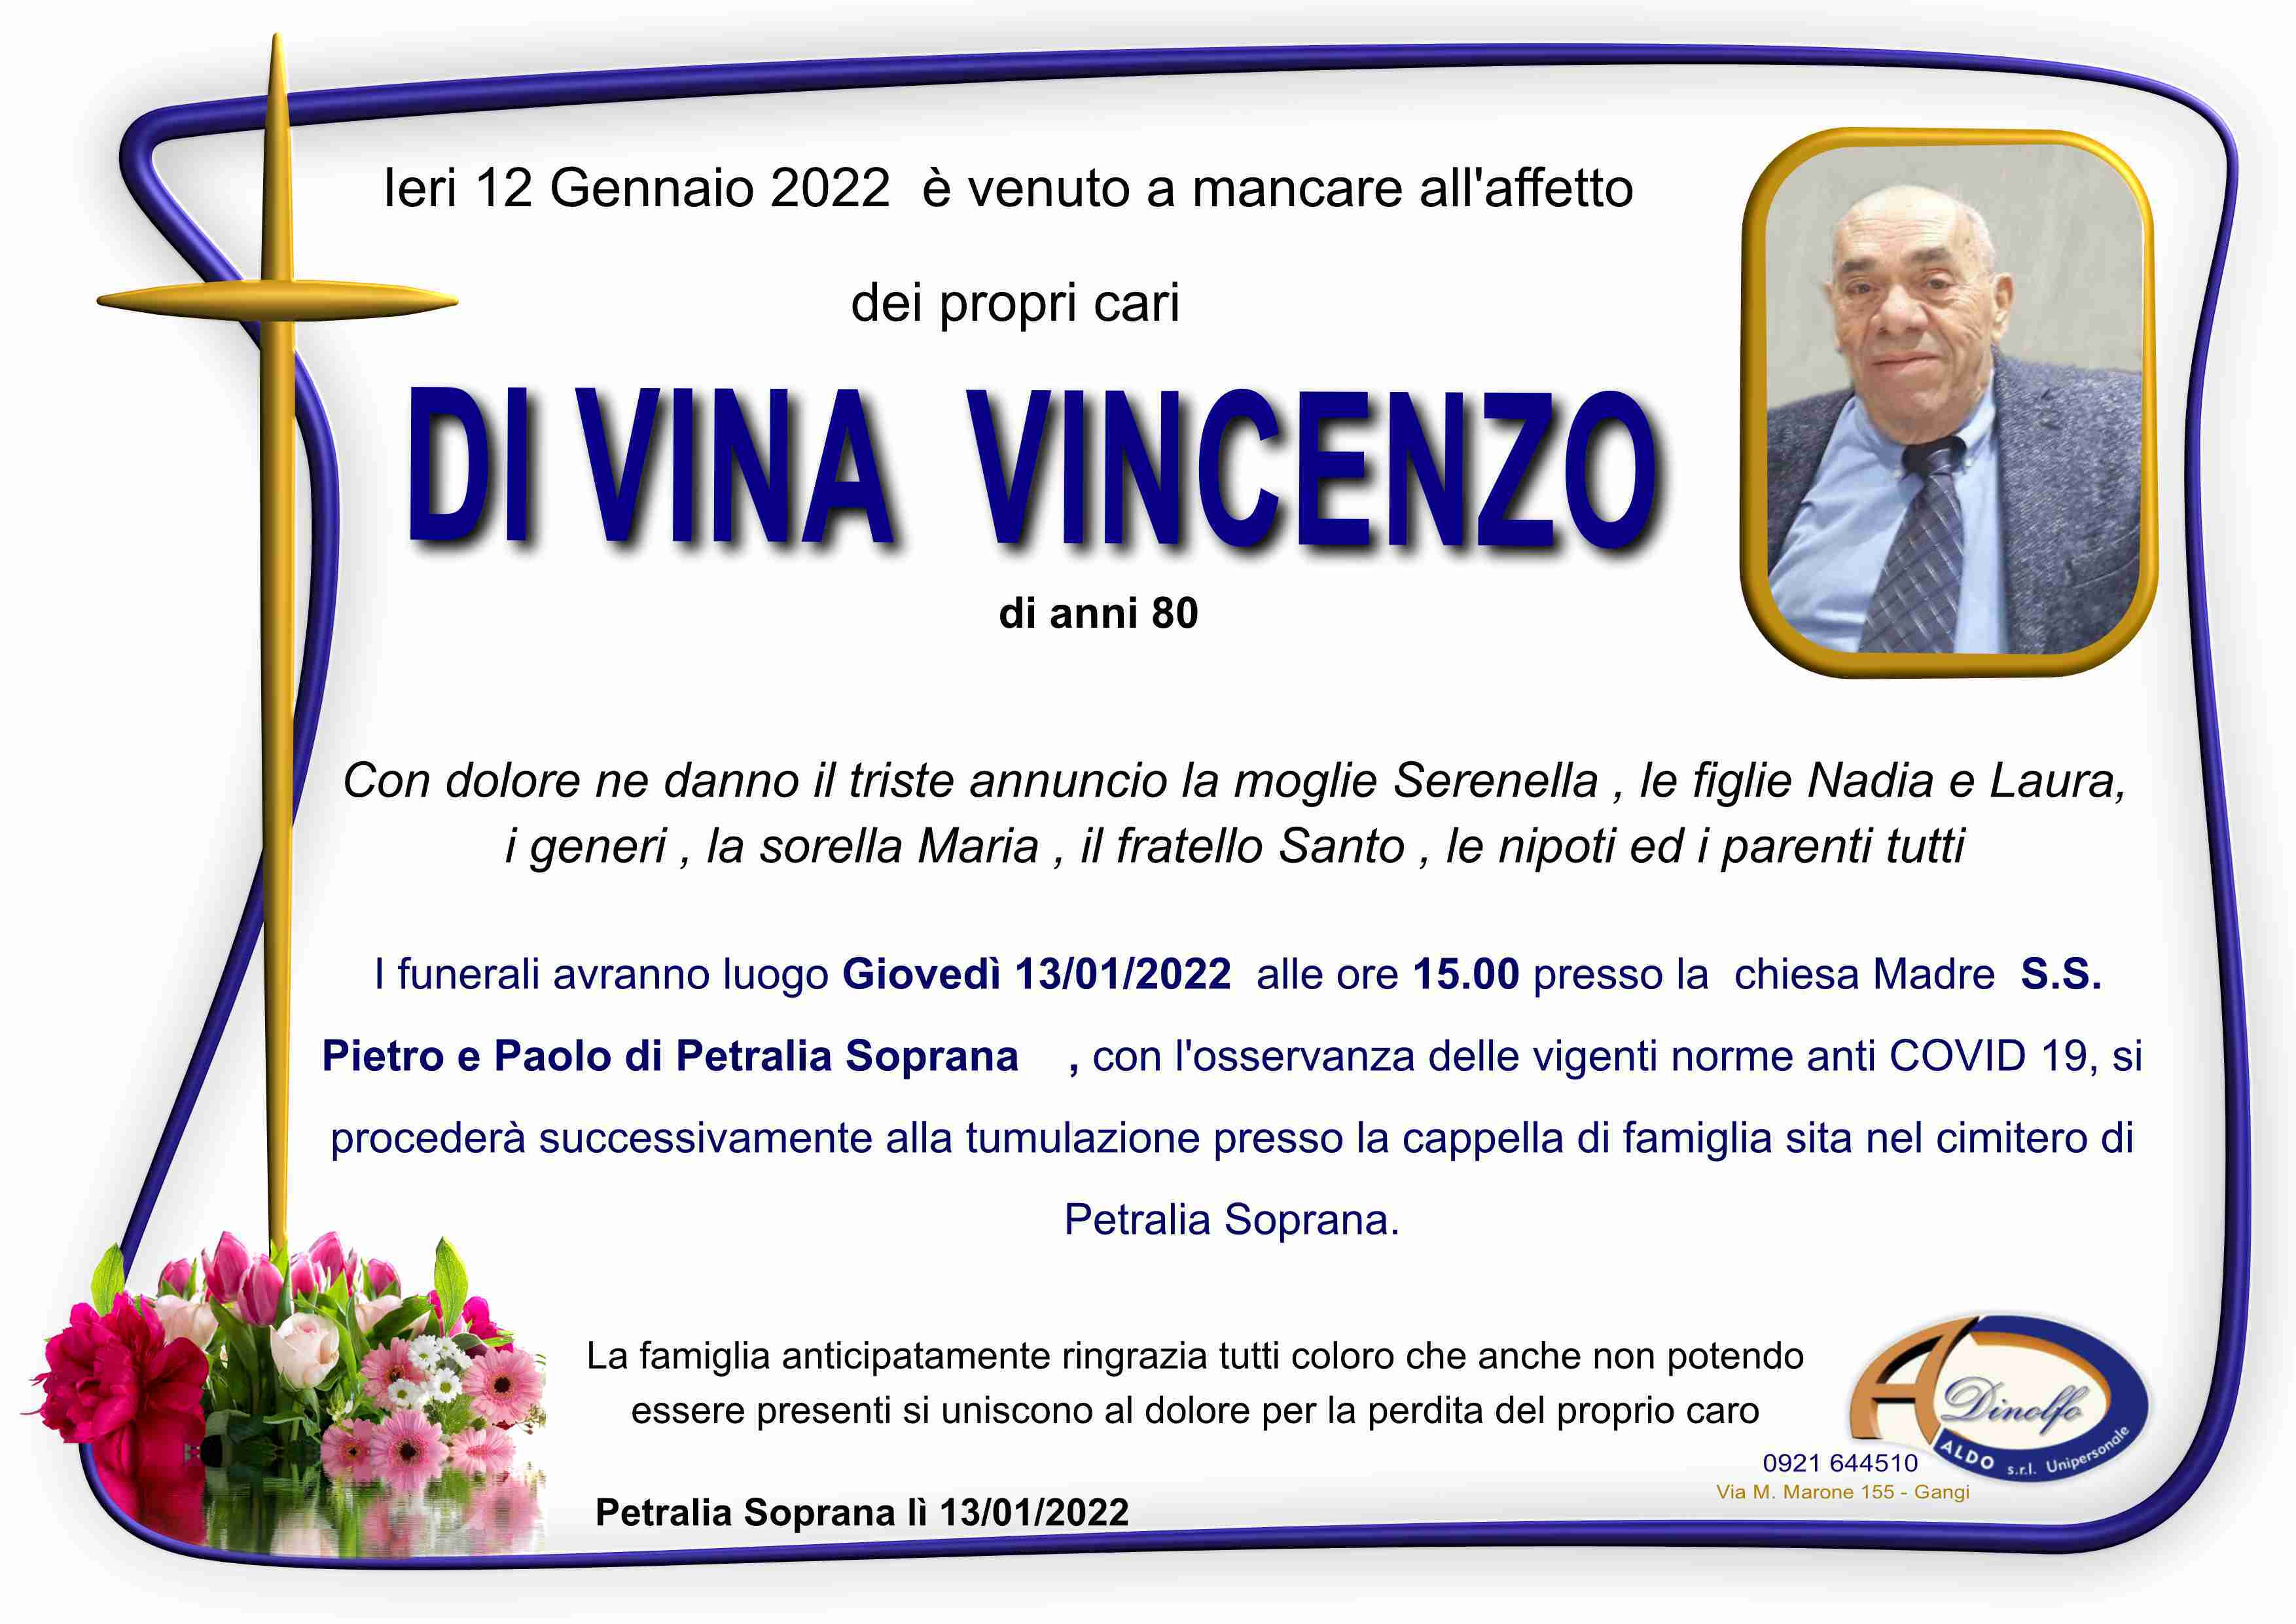 Vincenzo Di Vina